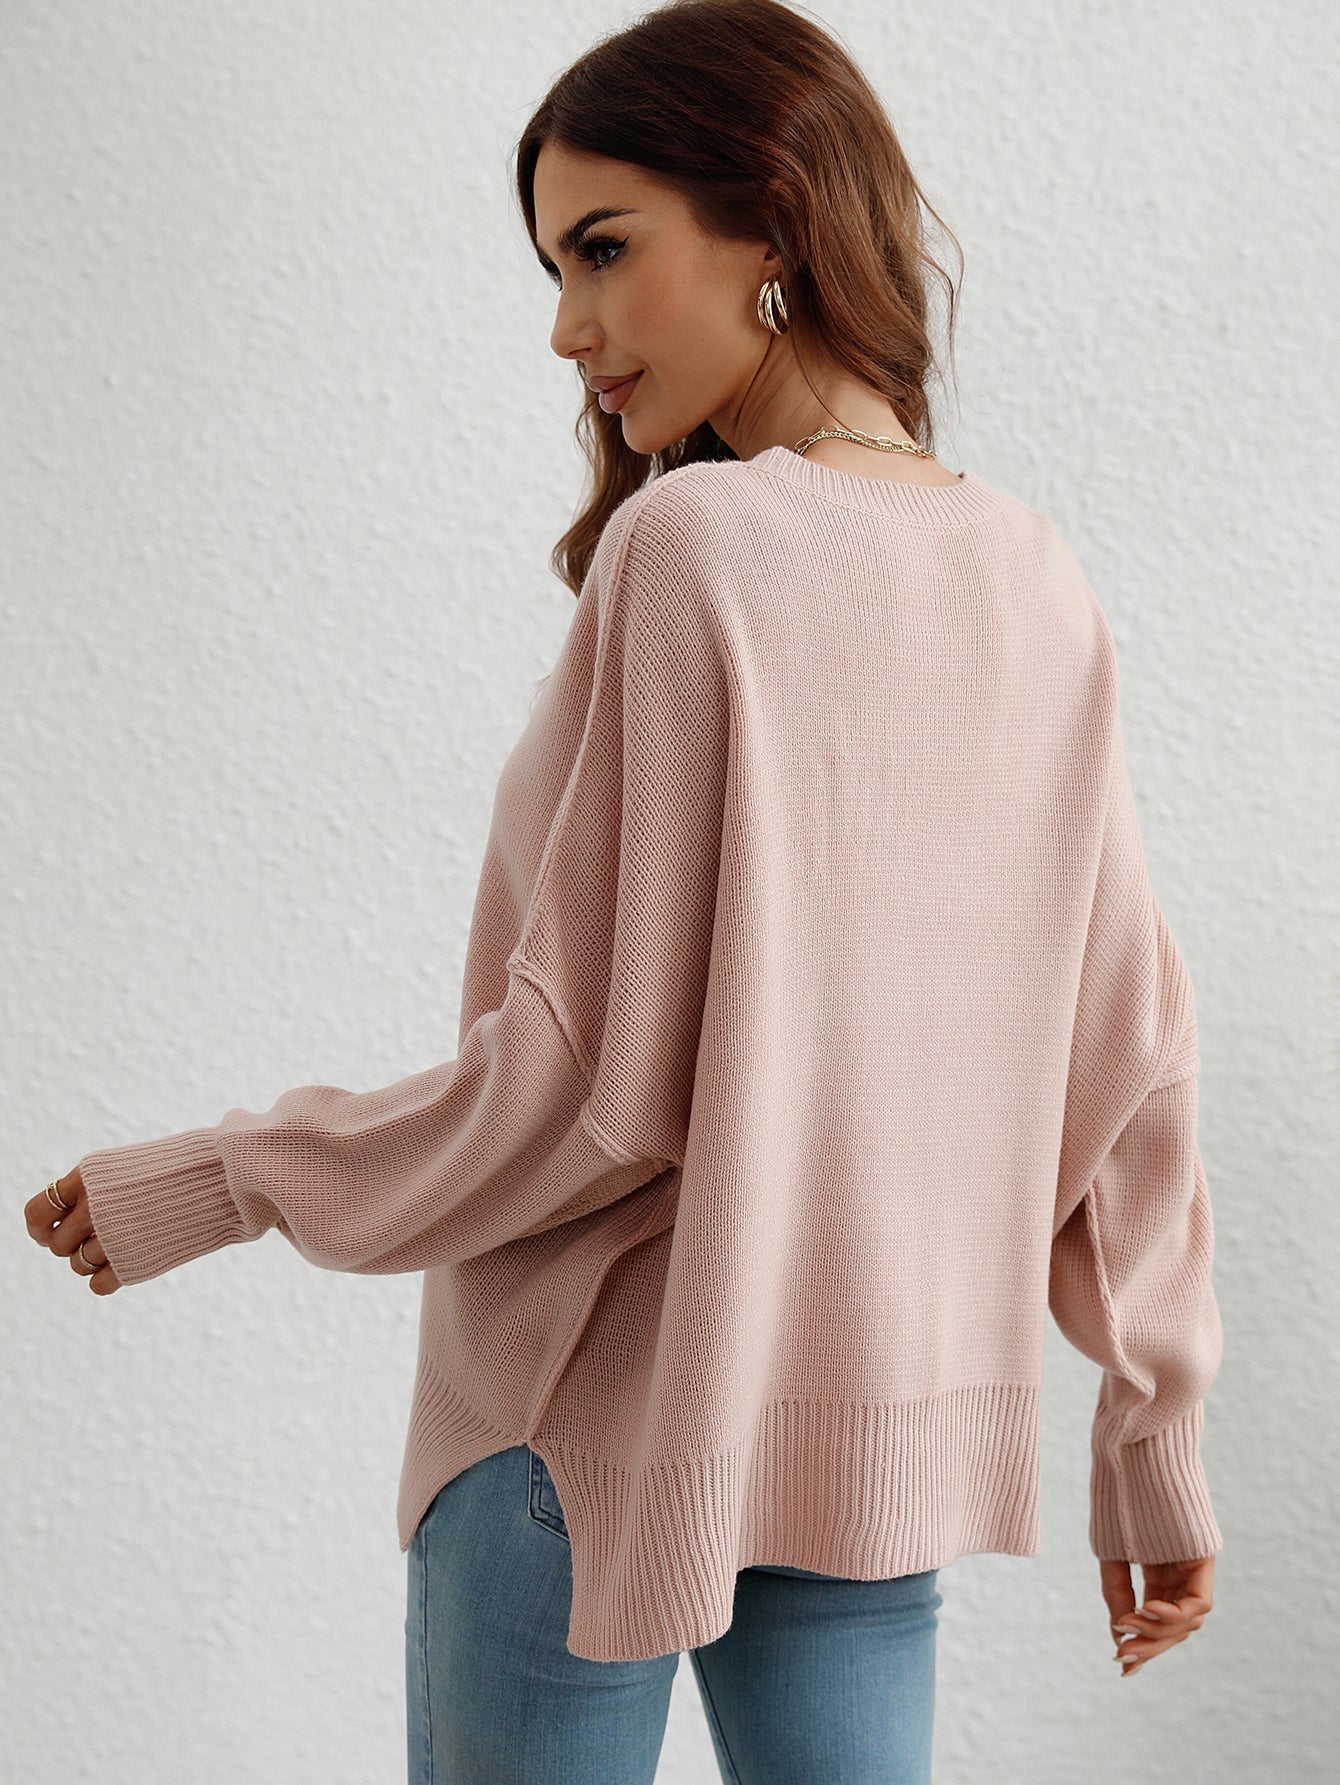 Women's long sleeve knitted loose split pullover